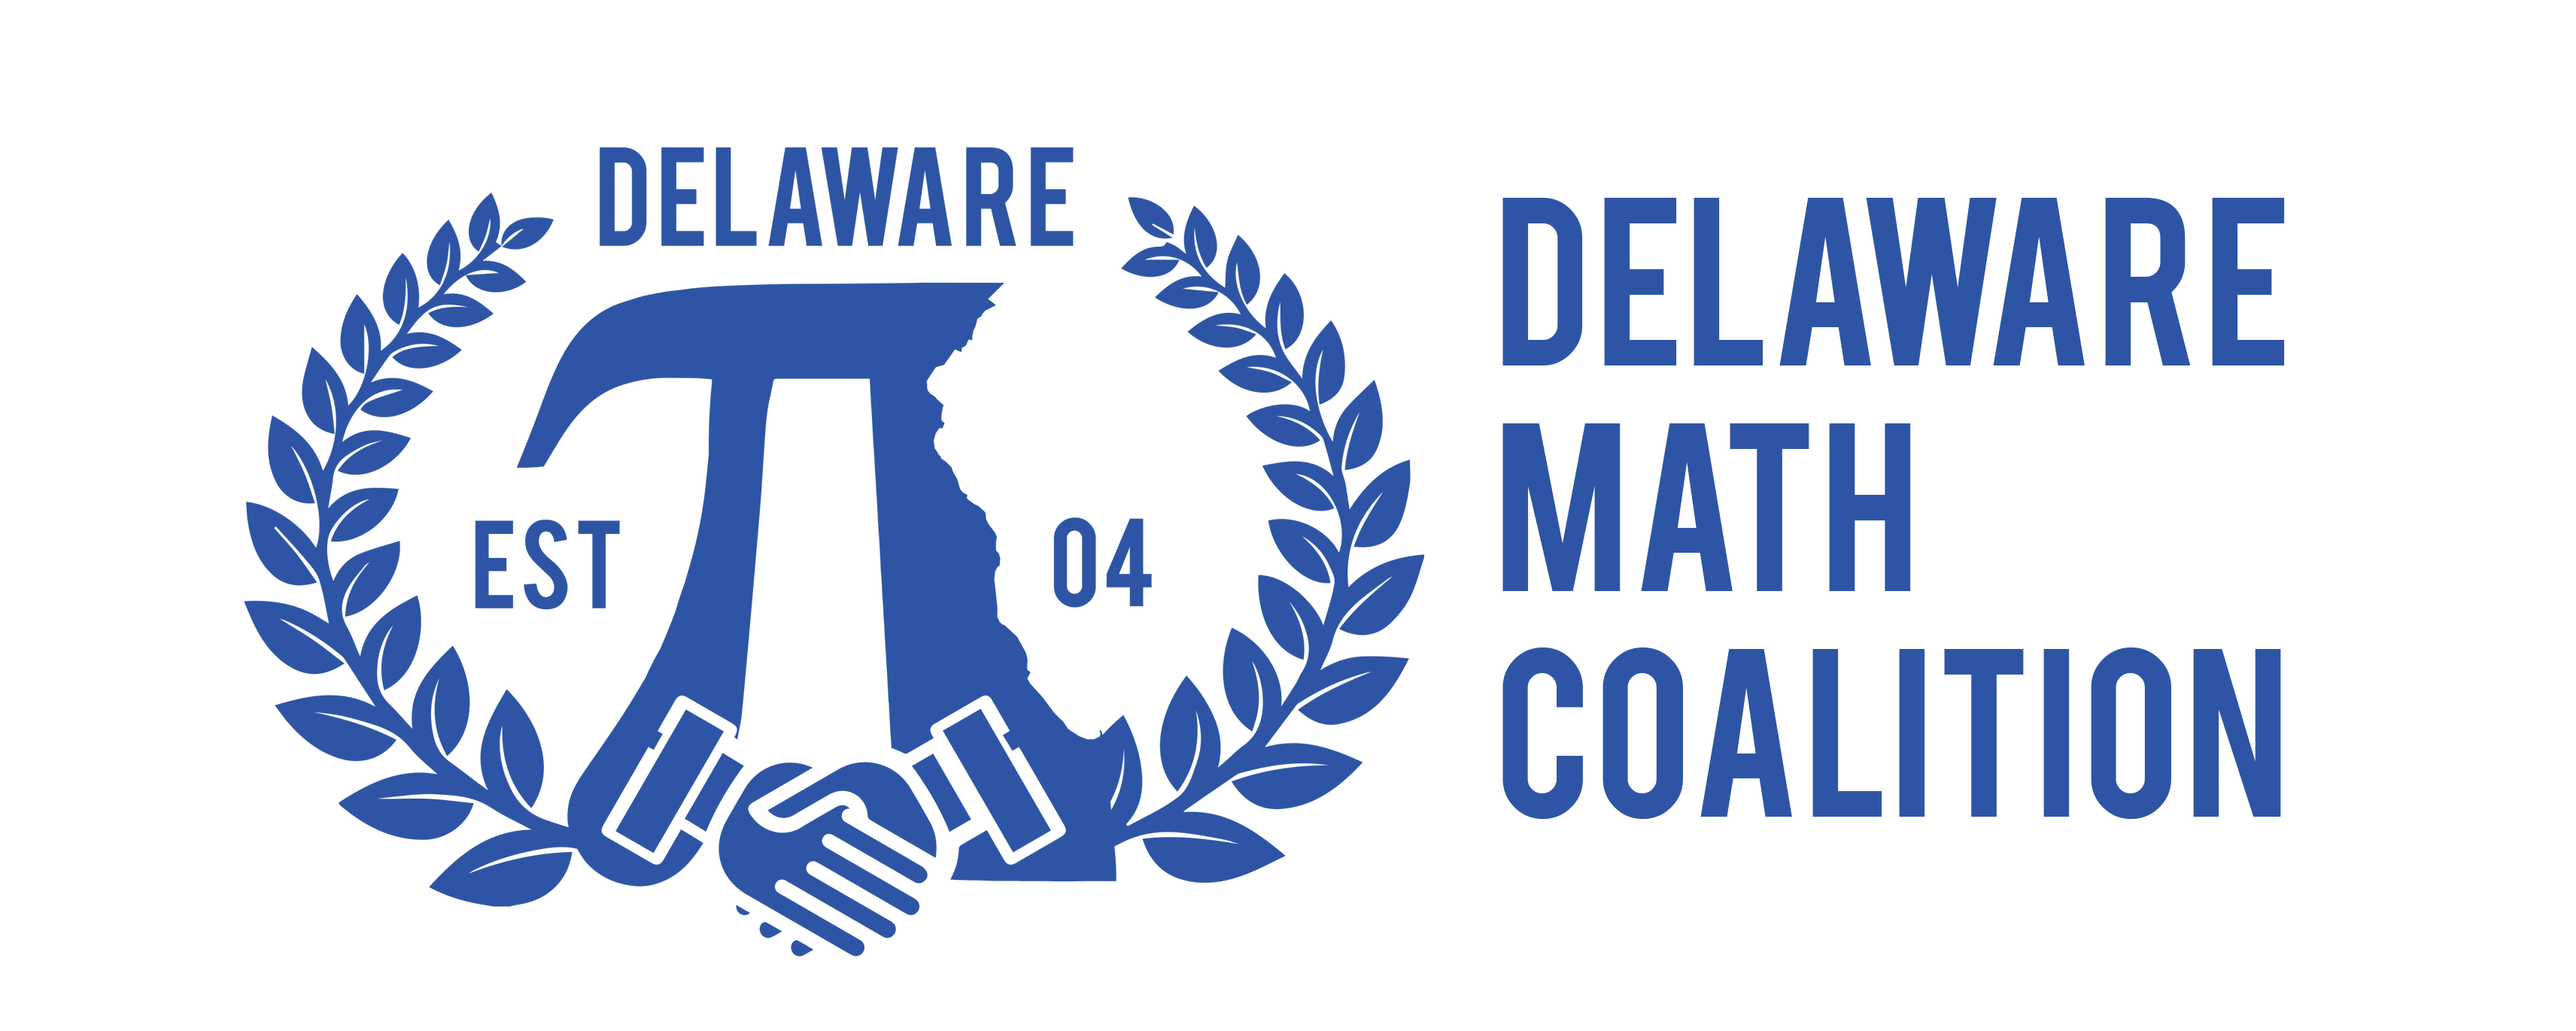 Delaware Mathematics Coalition logo